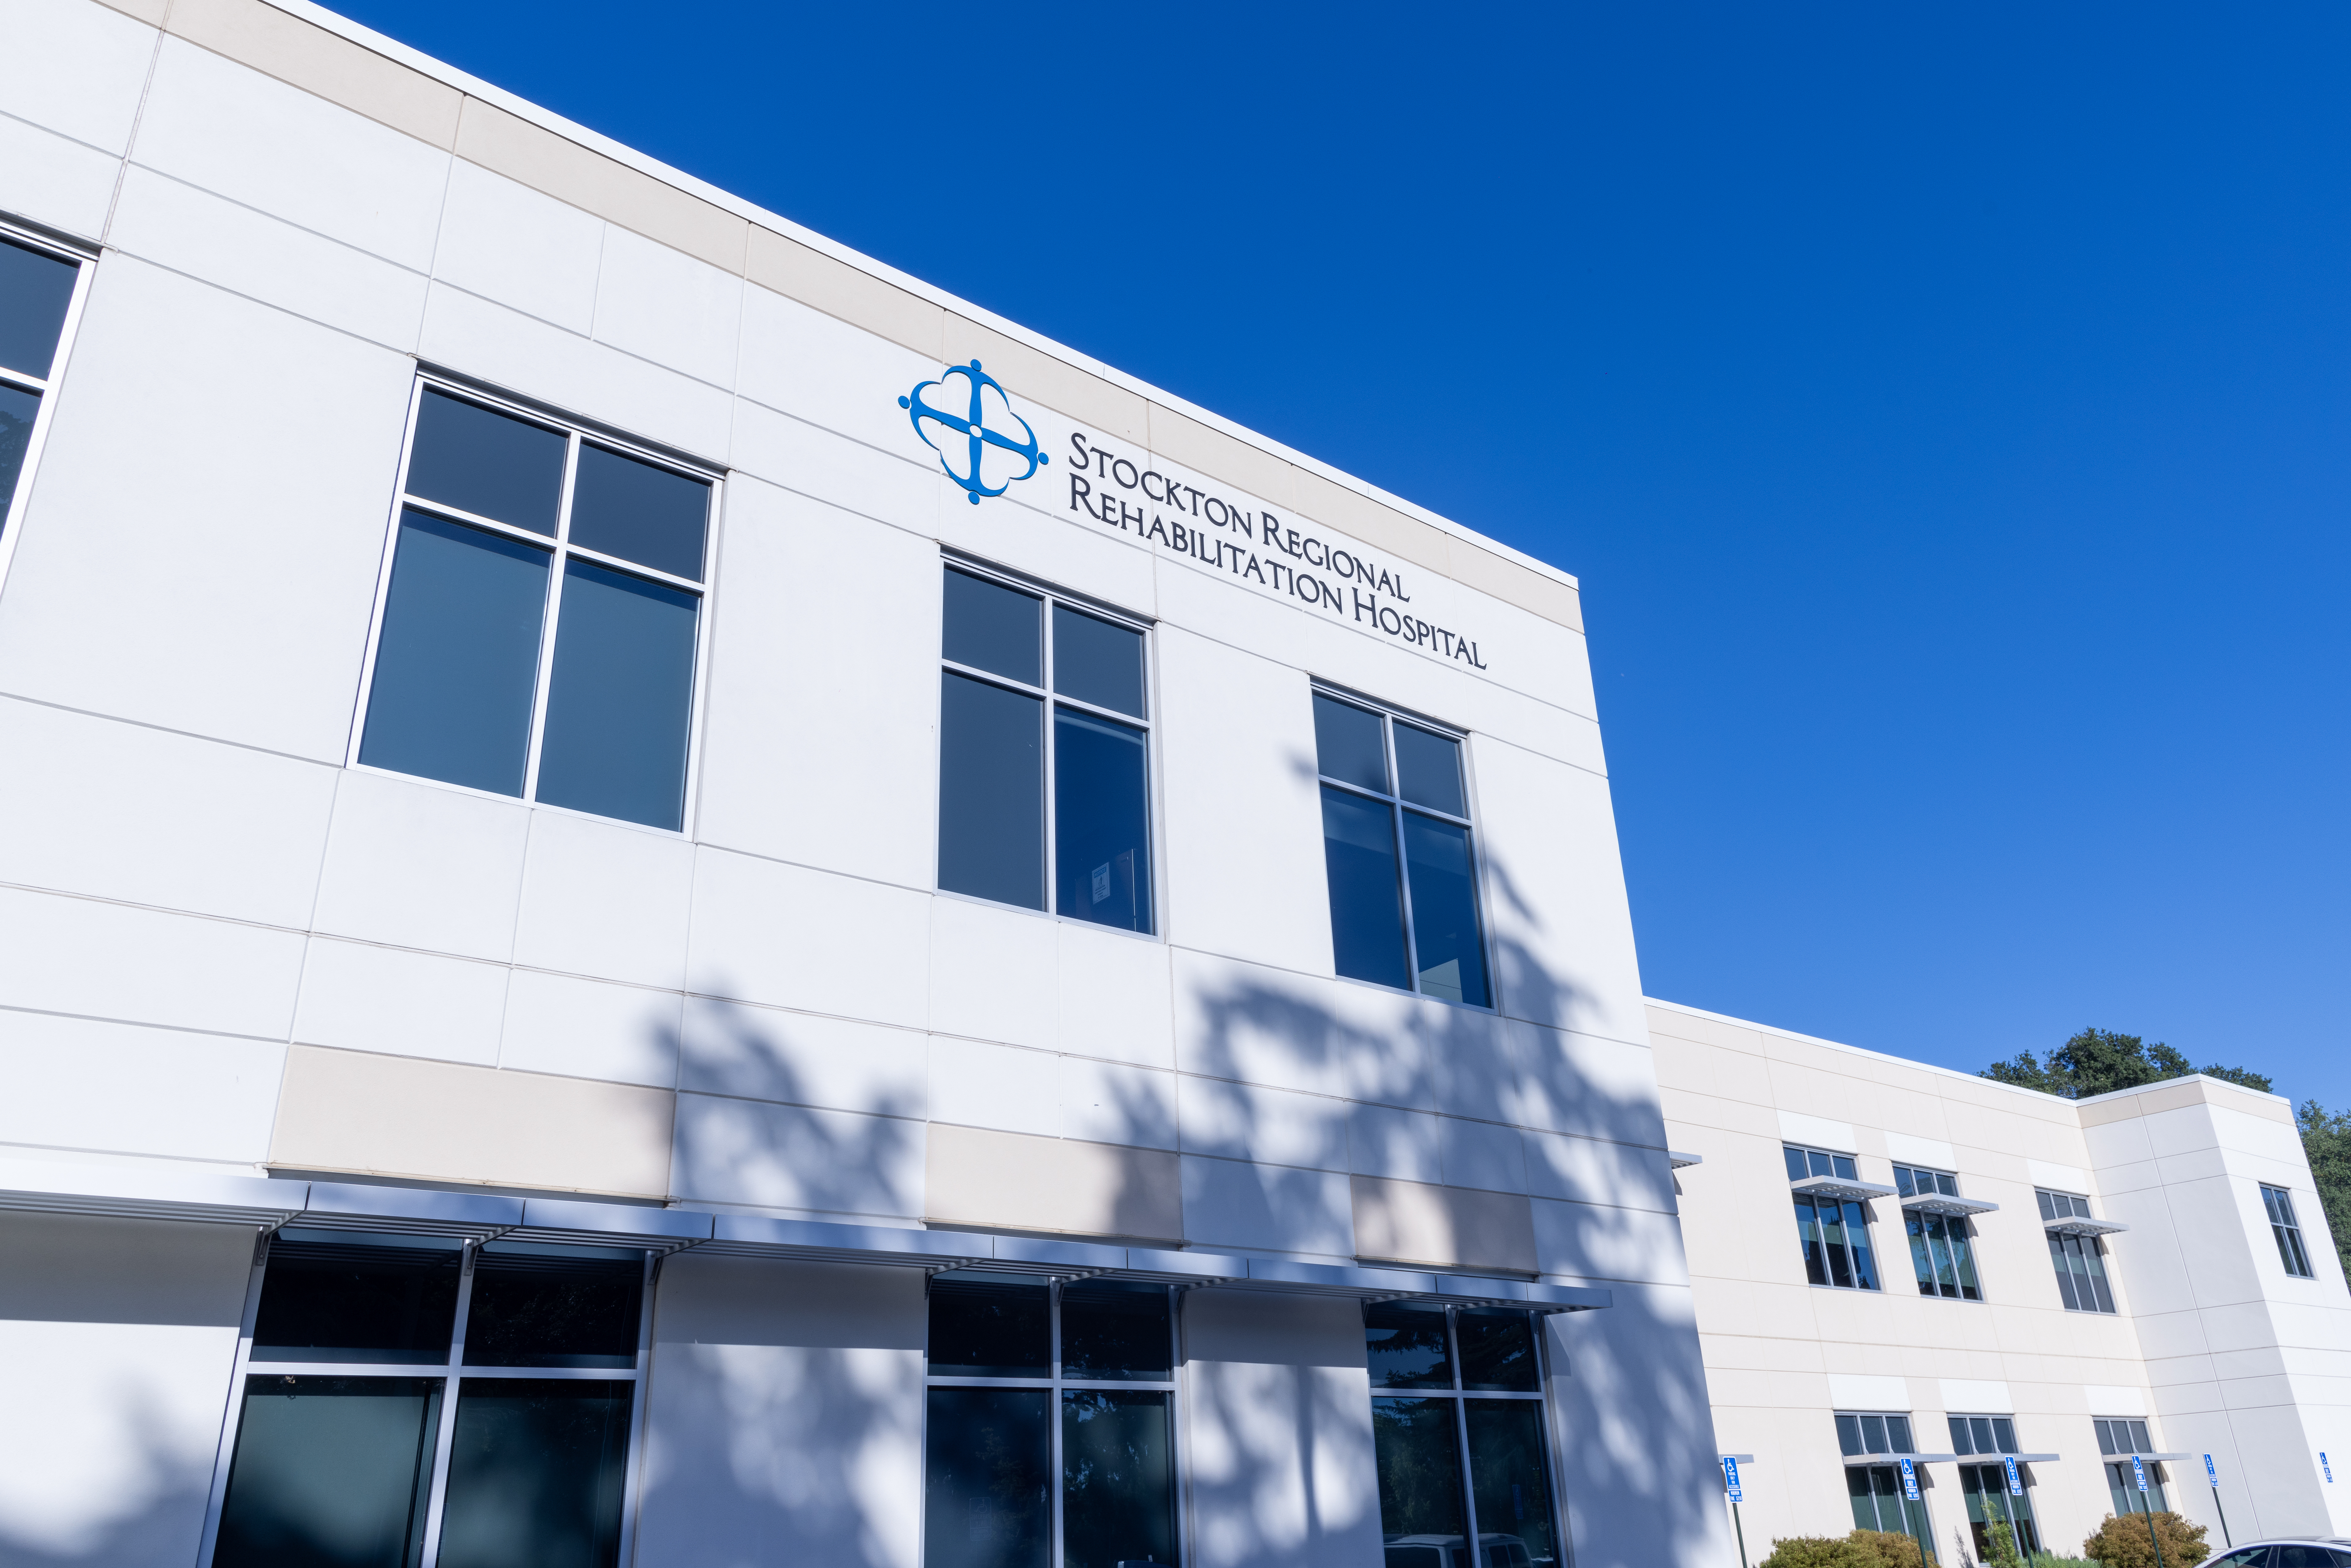 Stockton Regional Rehabilitation Hospital Celebrates One Year Of Community Service And Healing